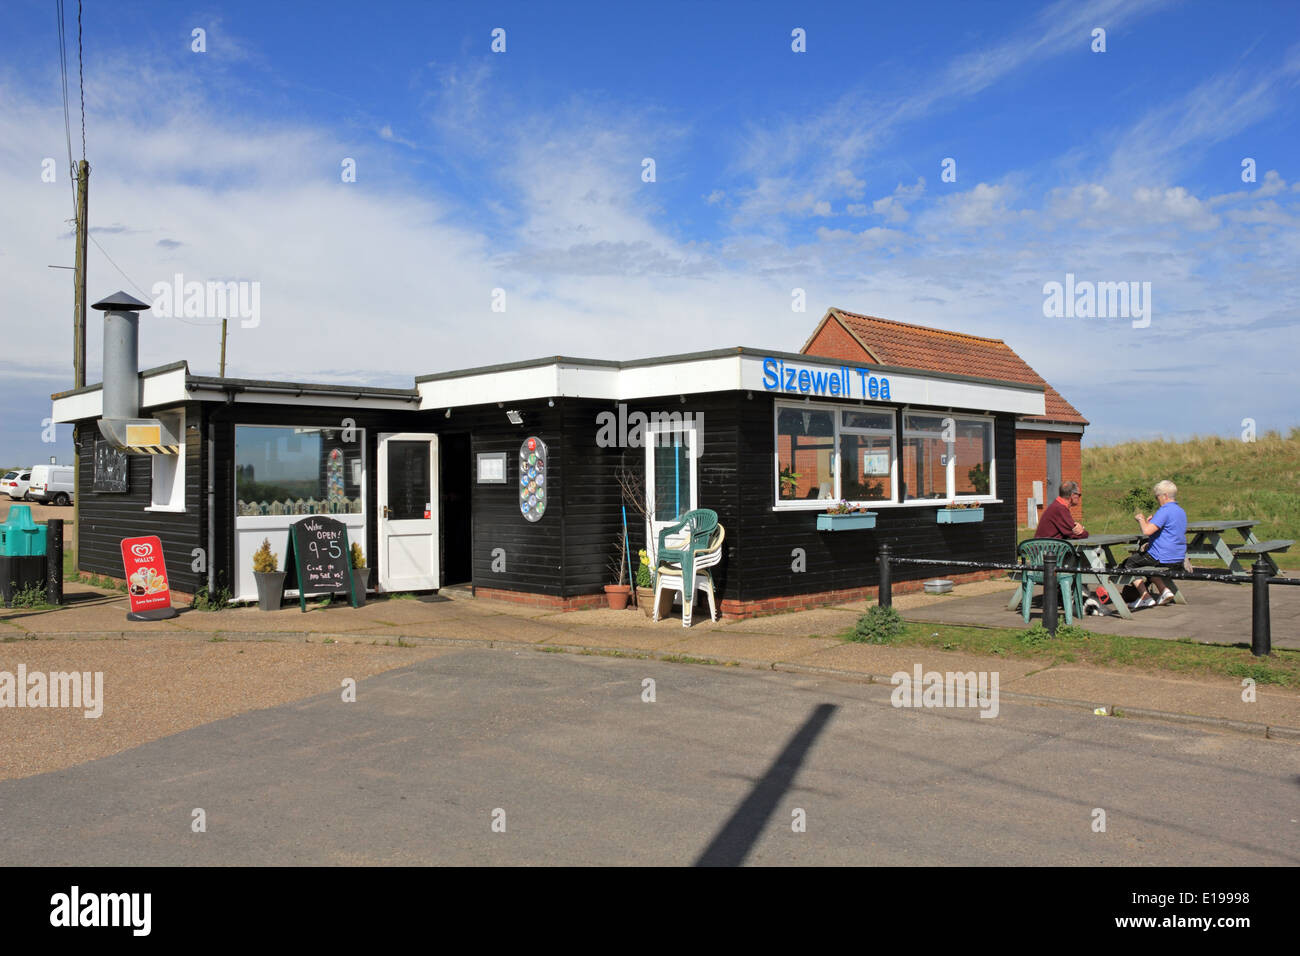 Sizewell Tea cafe, Suffolk, England, UK. Stock Photo